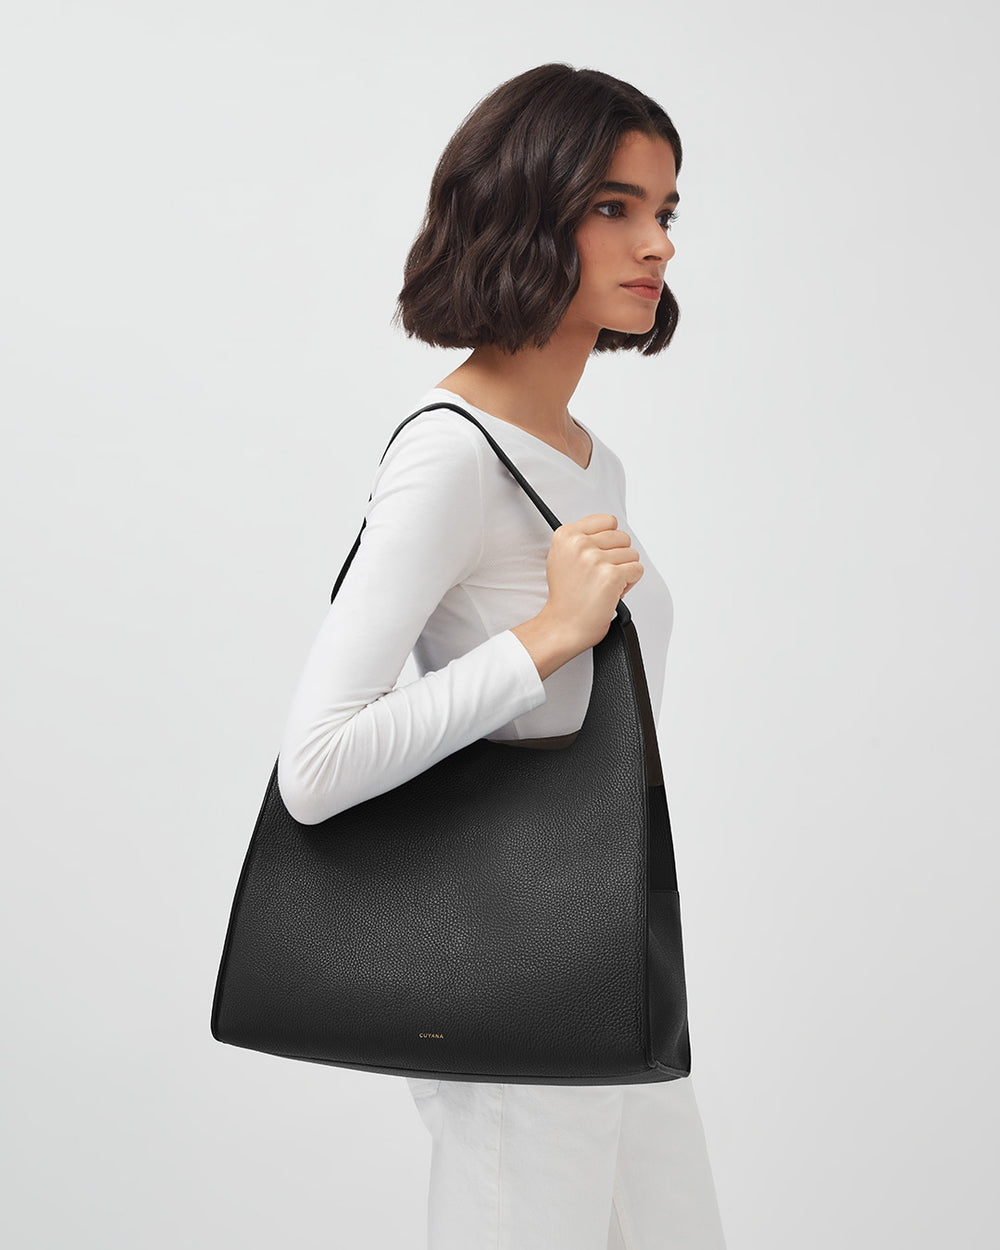 Woman standing sideways holding a large shoulder bag.